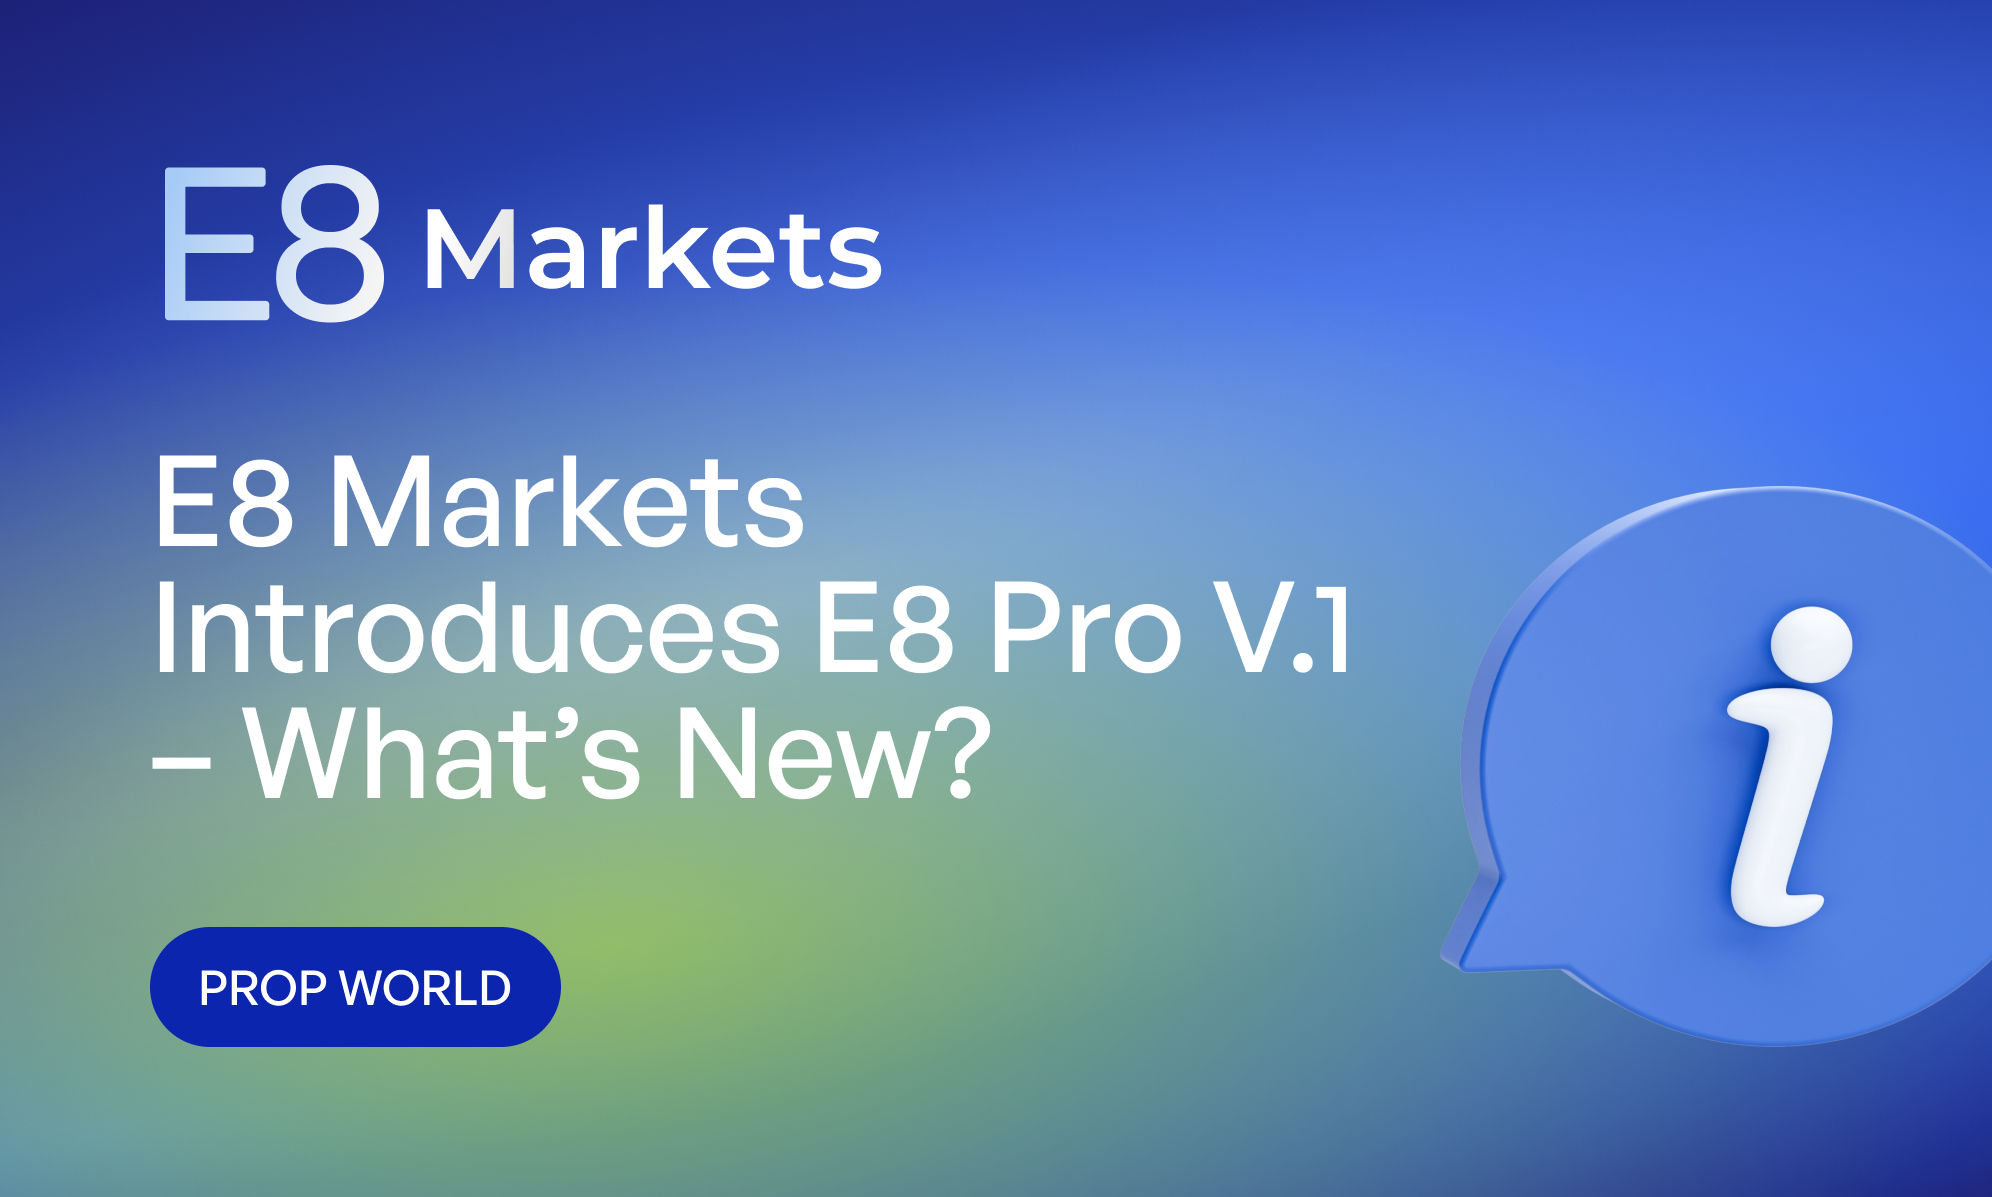 E8 Markets Introduces E8 Pro V.1 – What’s New?